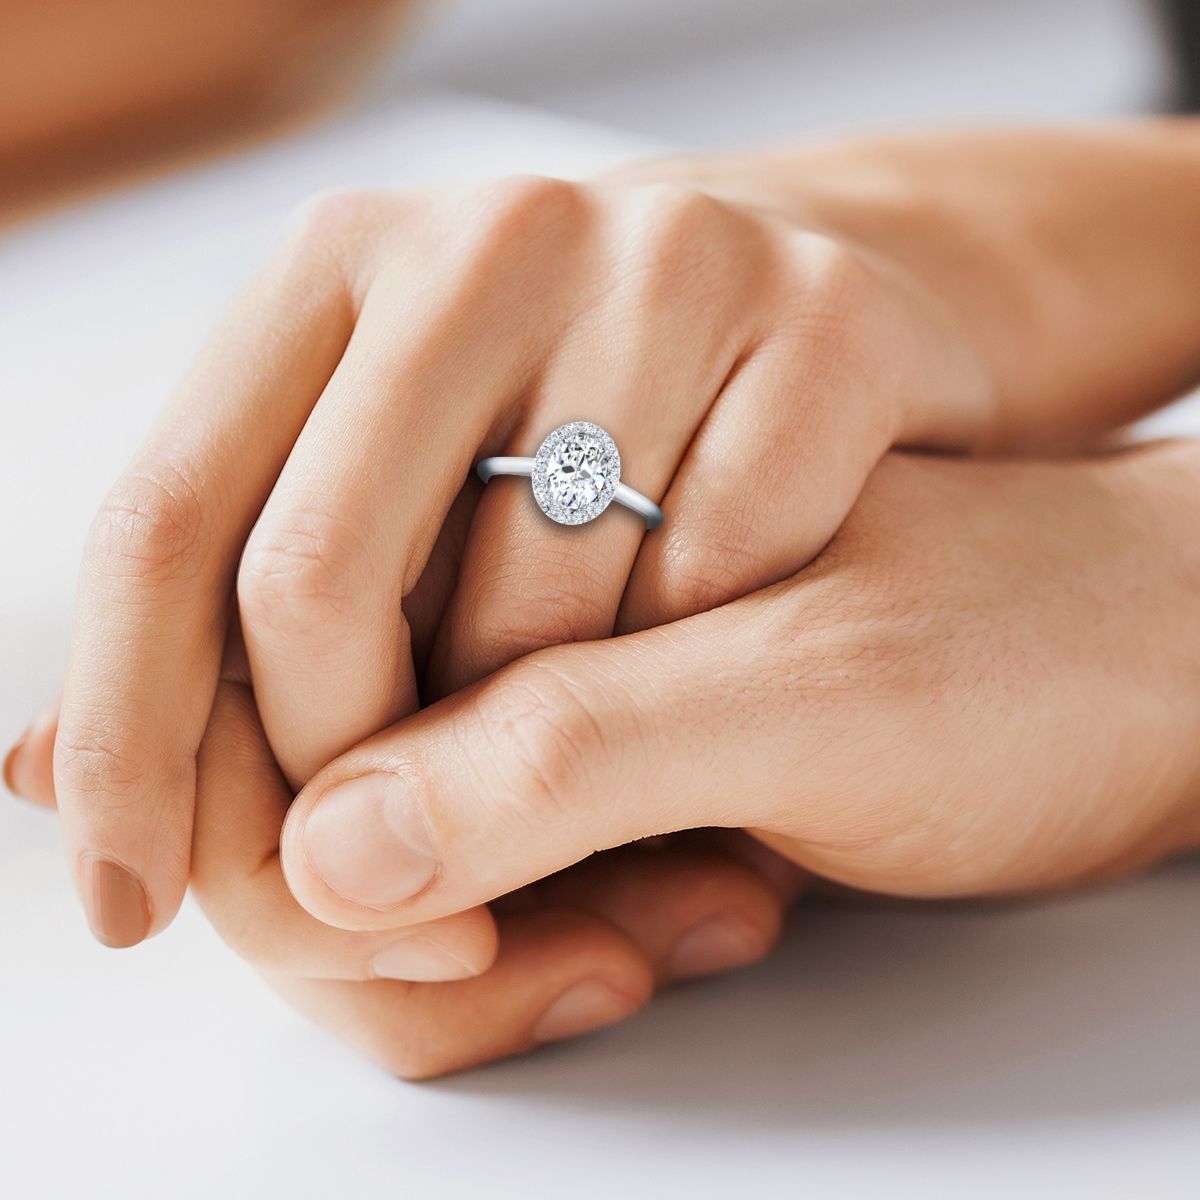 Platinum Oval Amethyst Shared Prong Diamond Halo Engagement Ring -1/5ctw